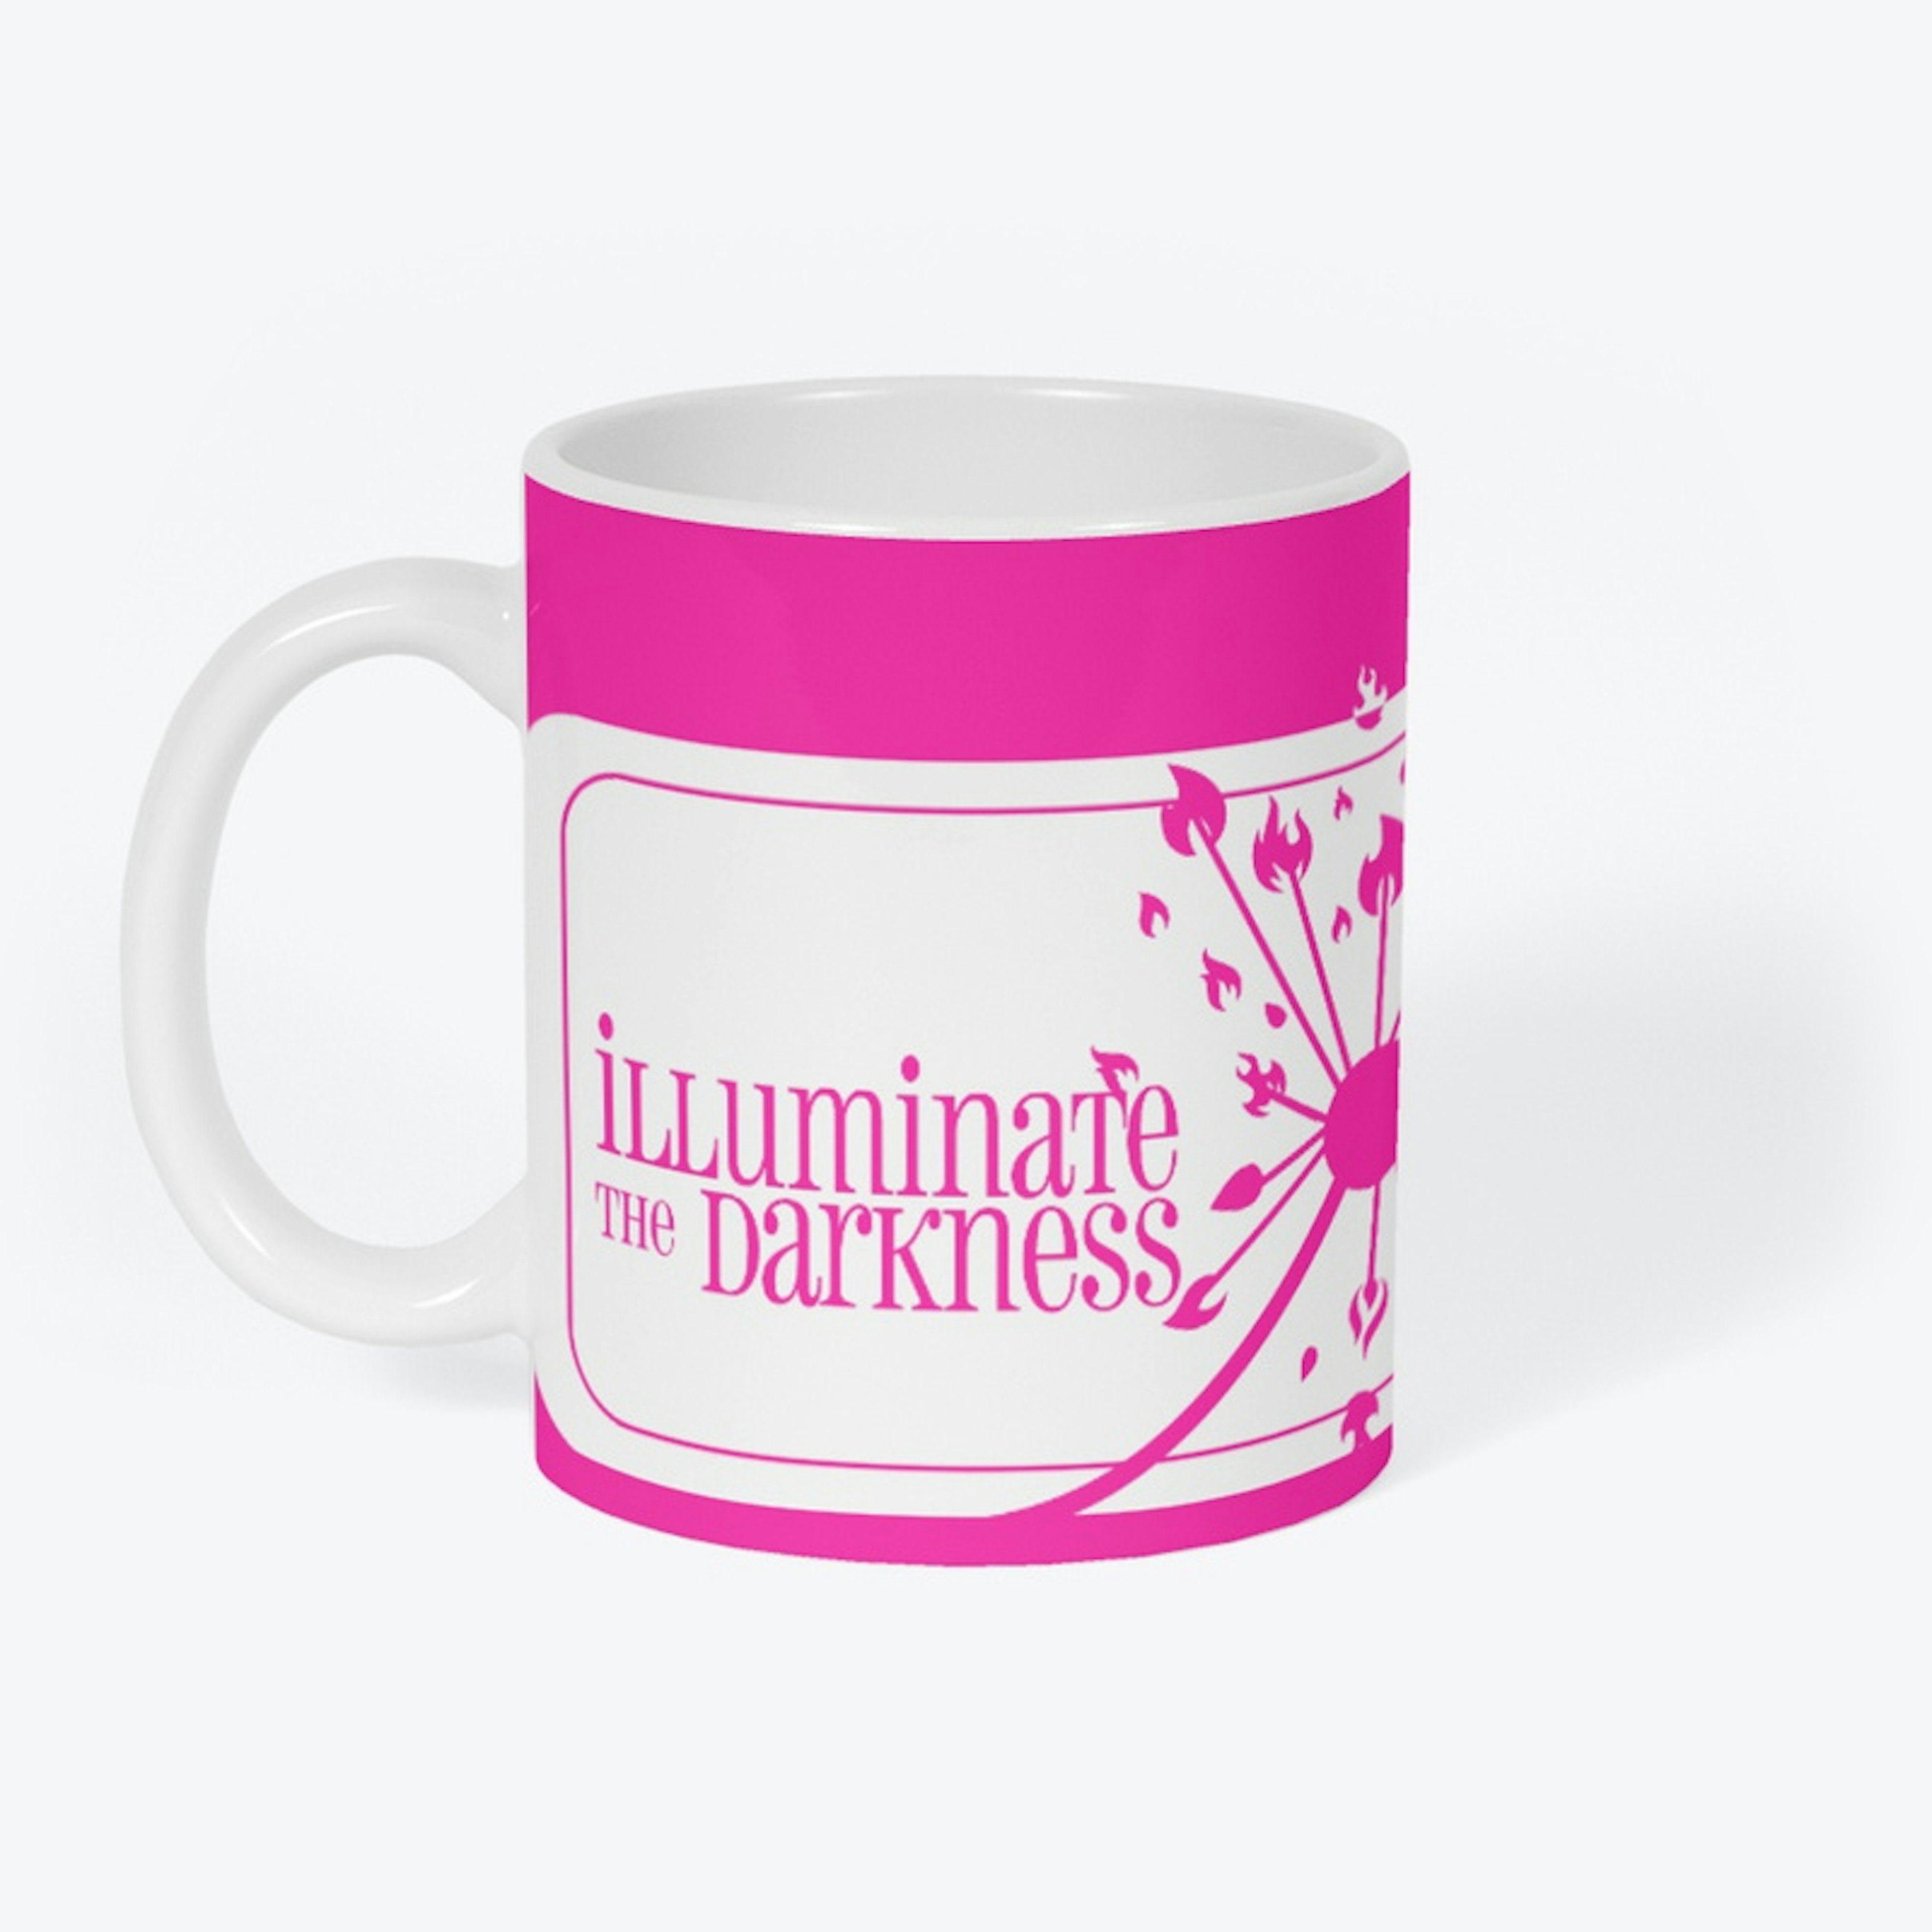 Illuminate the Darkness mug